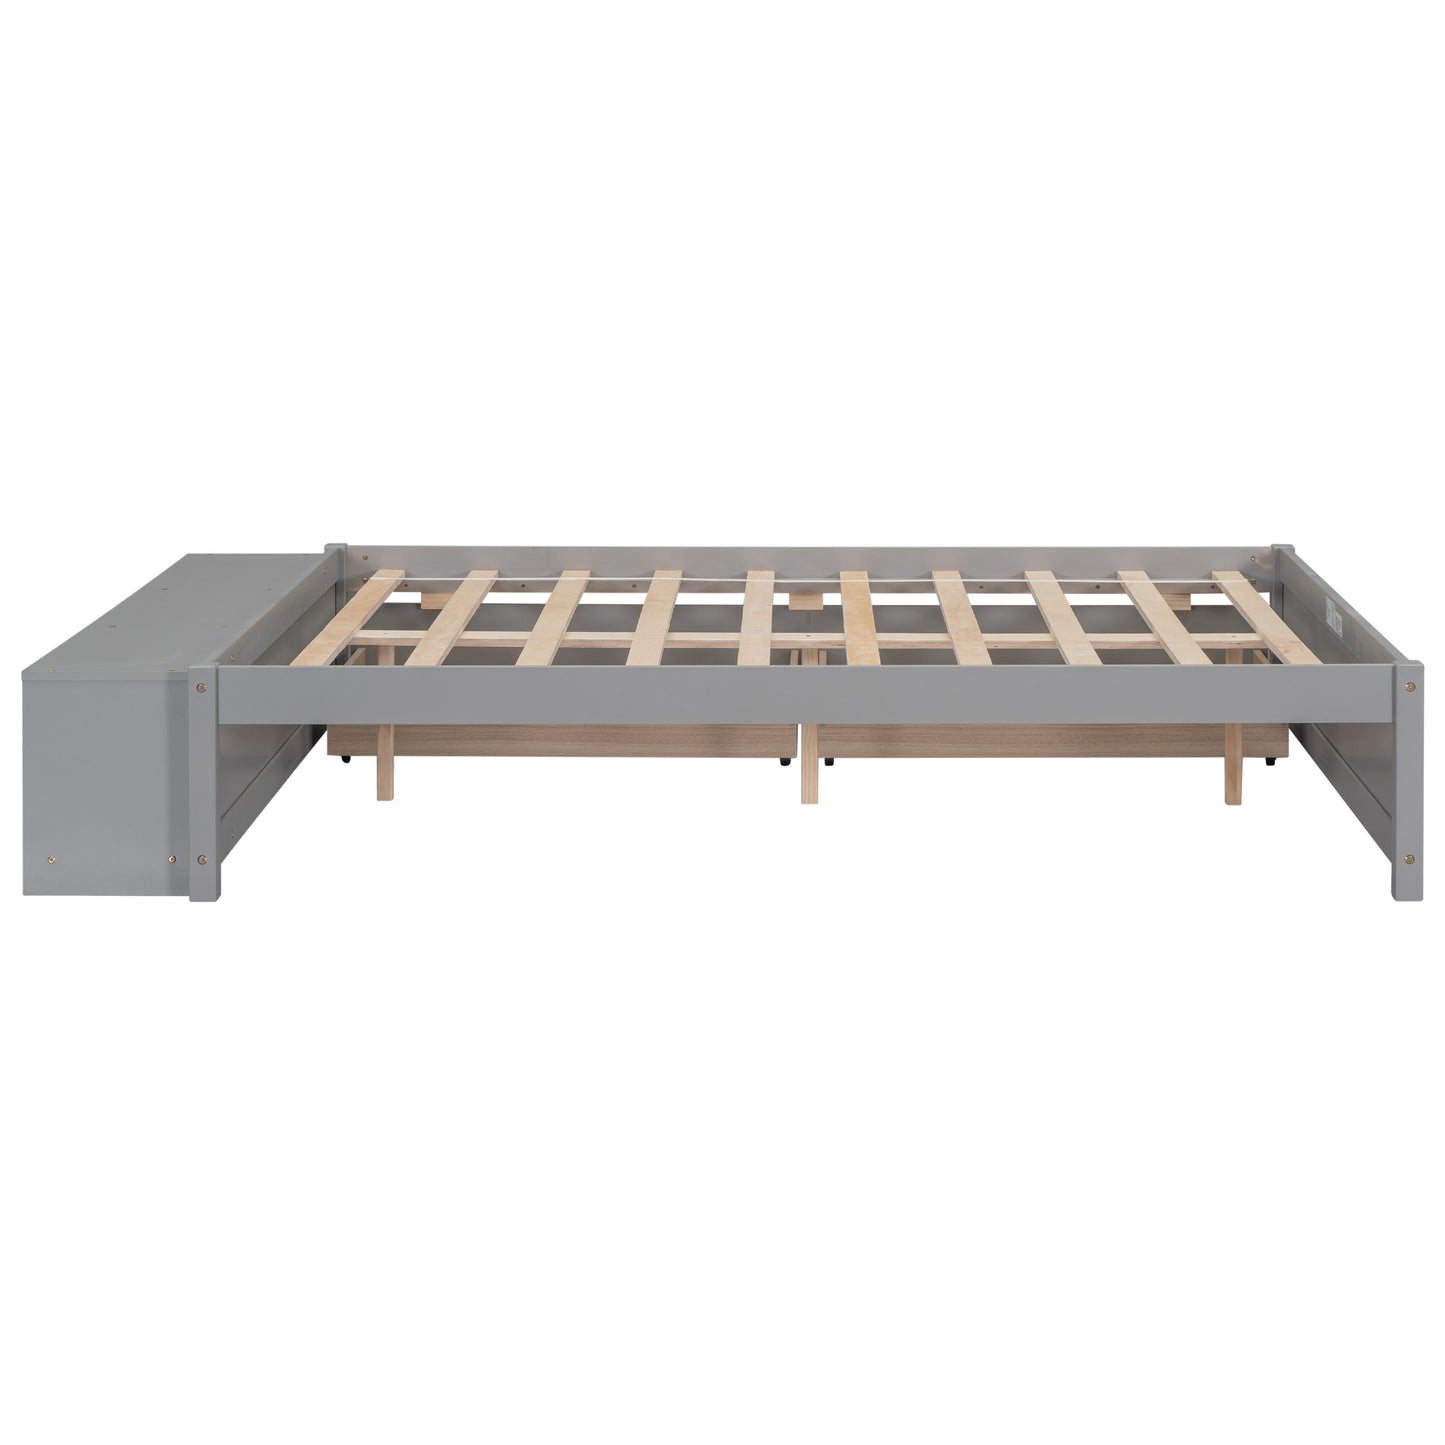 Full Size Platform Bed with Storage Case, 2 Storage drawers, Lengthwise Support Slat,Grey